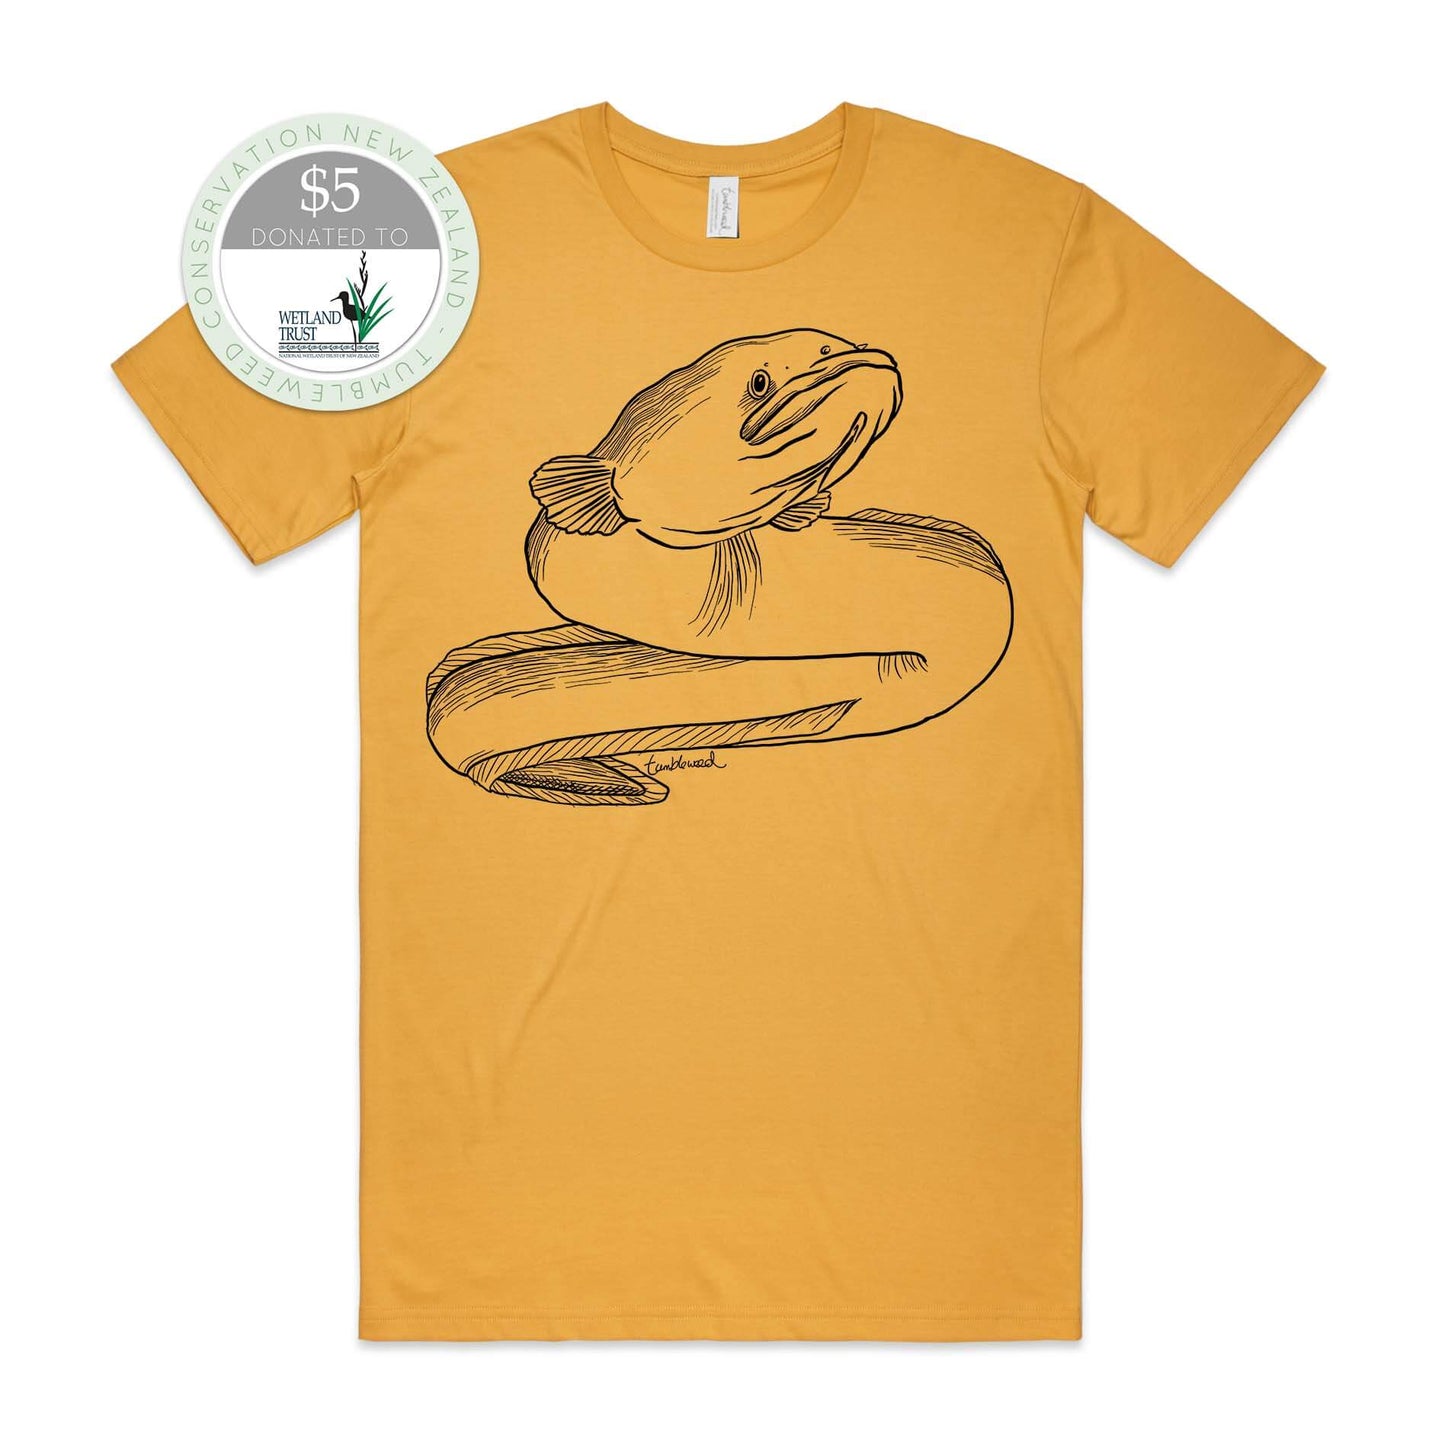 Charcoal, female t-shirt featuring a screen printed Longfin Eel/Tuna design.